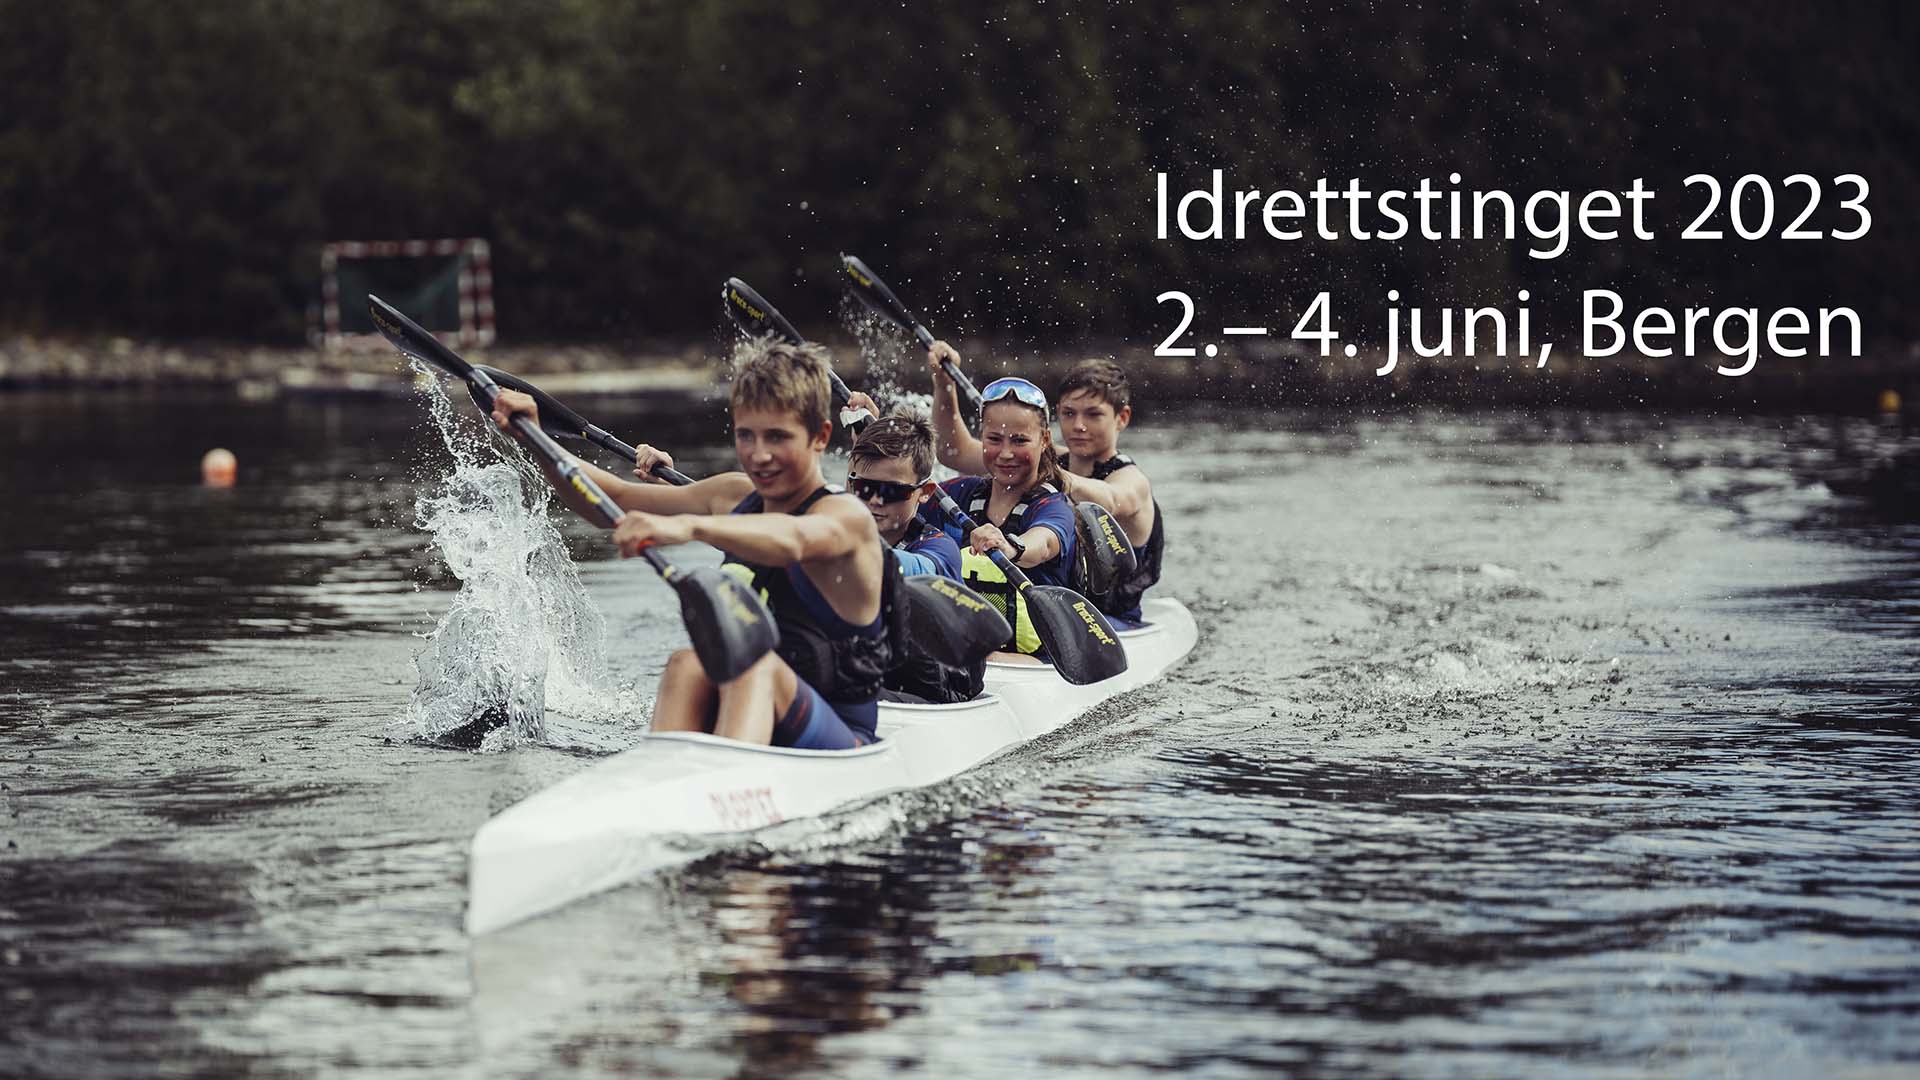 Idrettstinget foregår i Bergen fra 2.-4. juni 2023. Foto: Erik Ruud / Norges idrettsforbund